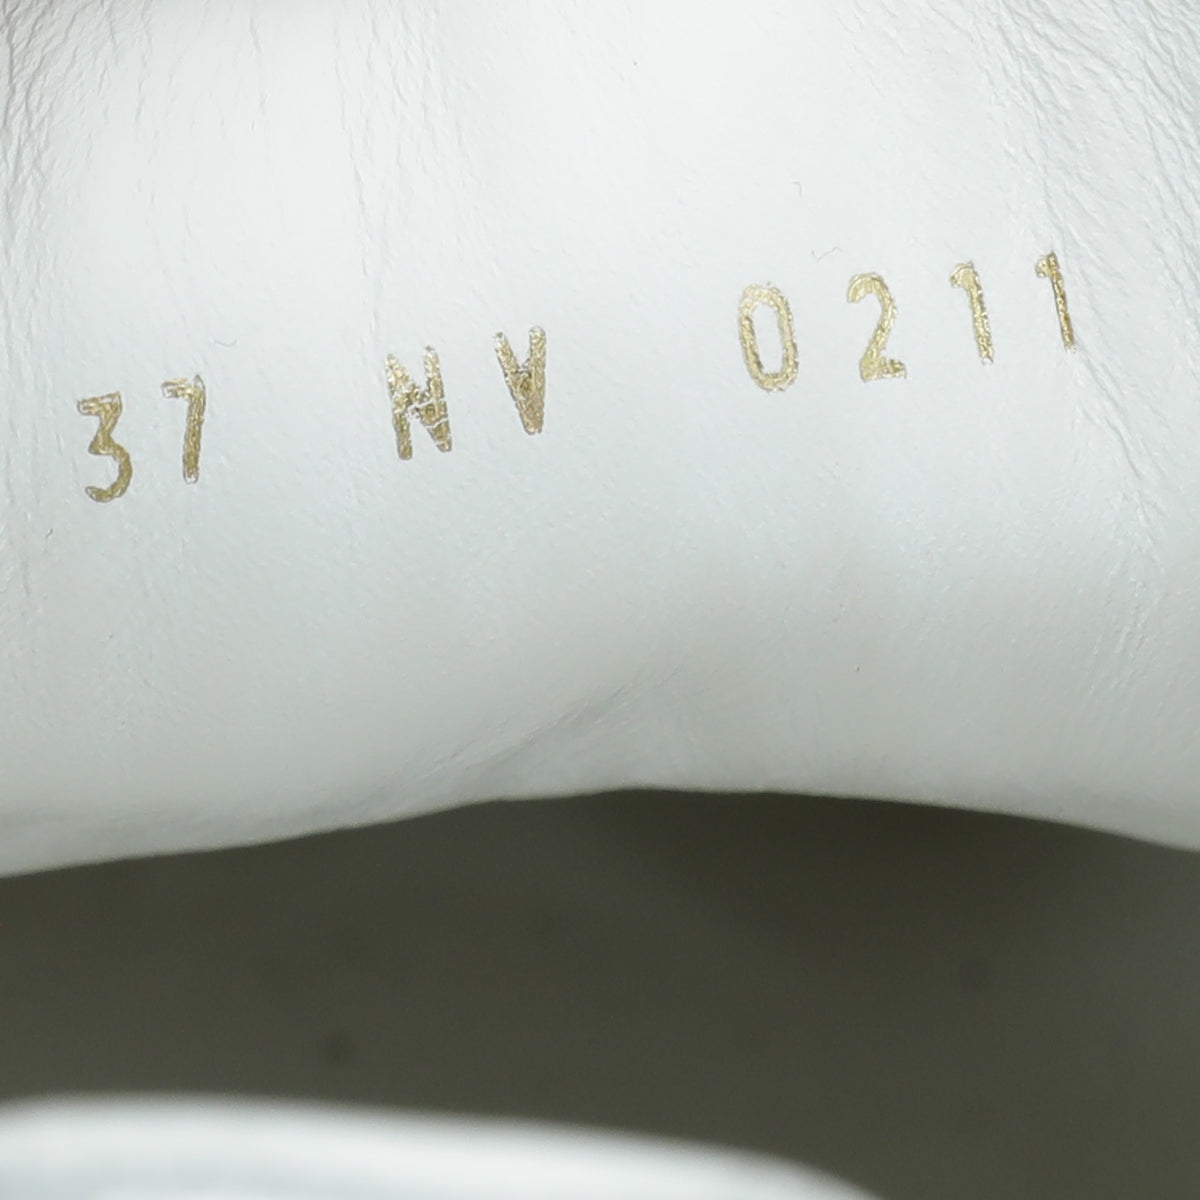 Louis Vuitton Bicolor Aftergame Sneakers 37 – The Closet